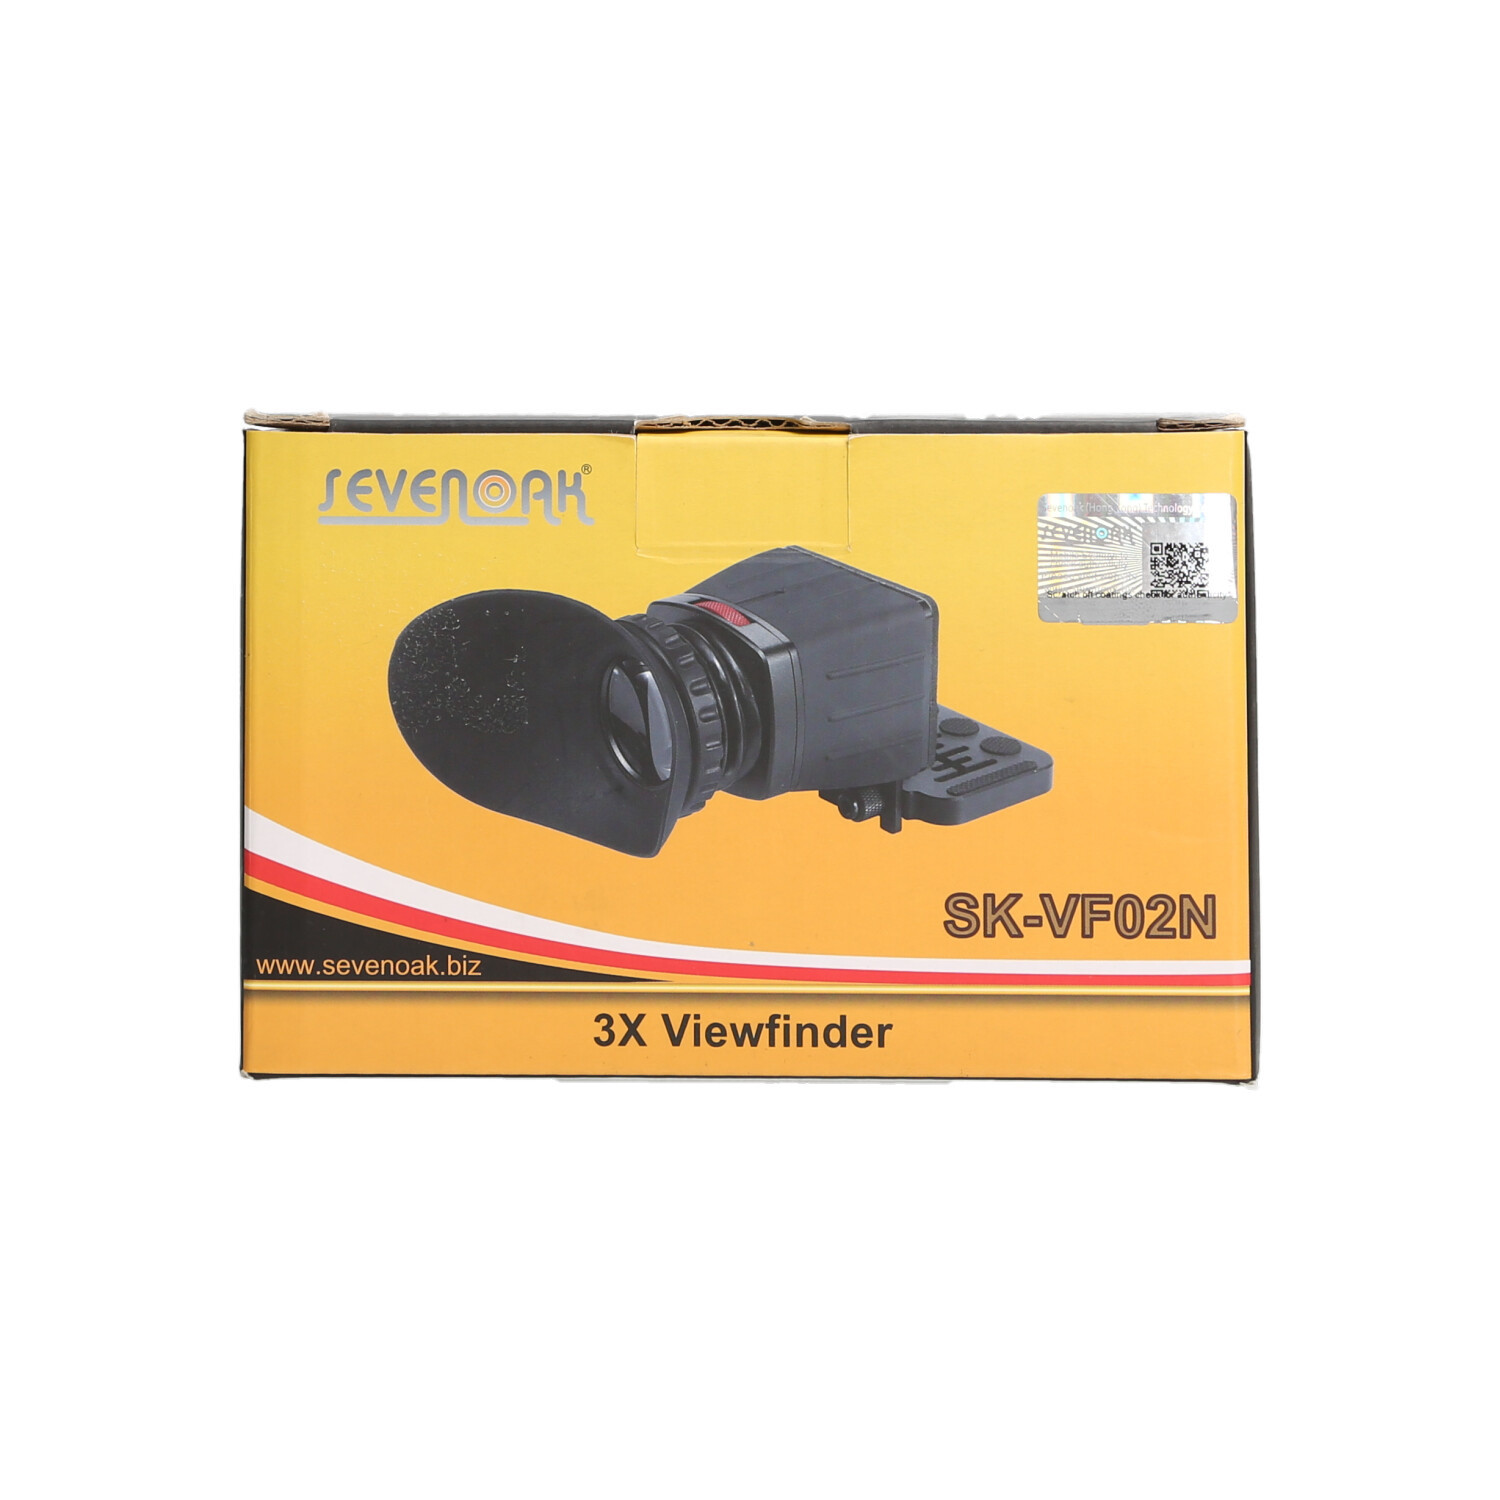 SevenOak Sevenoak SK-VF02N Pro ViewFinder Magnifier Loupe